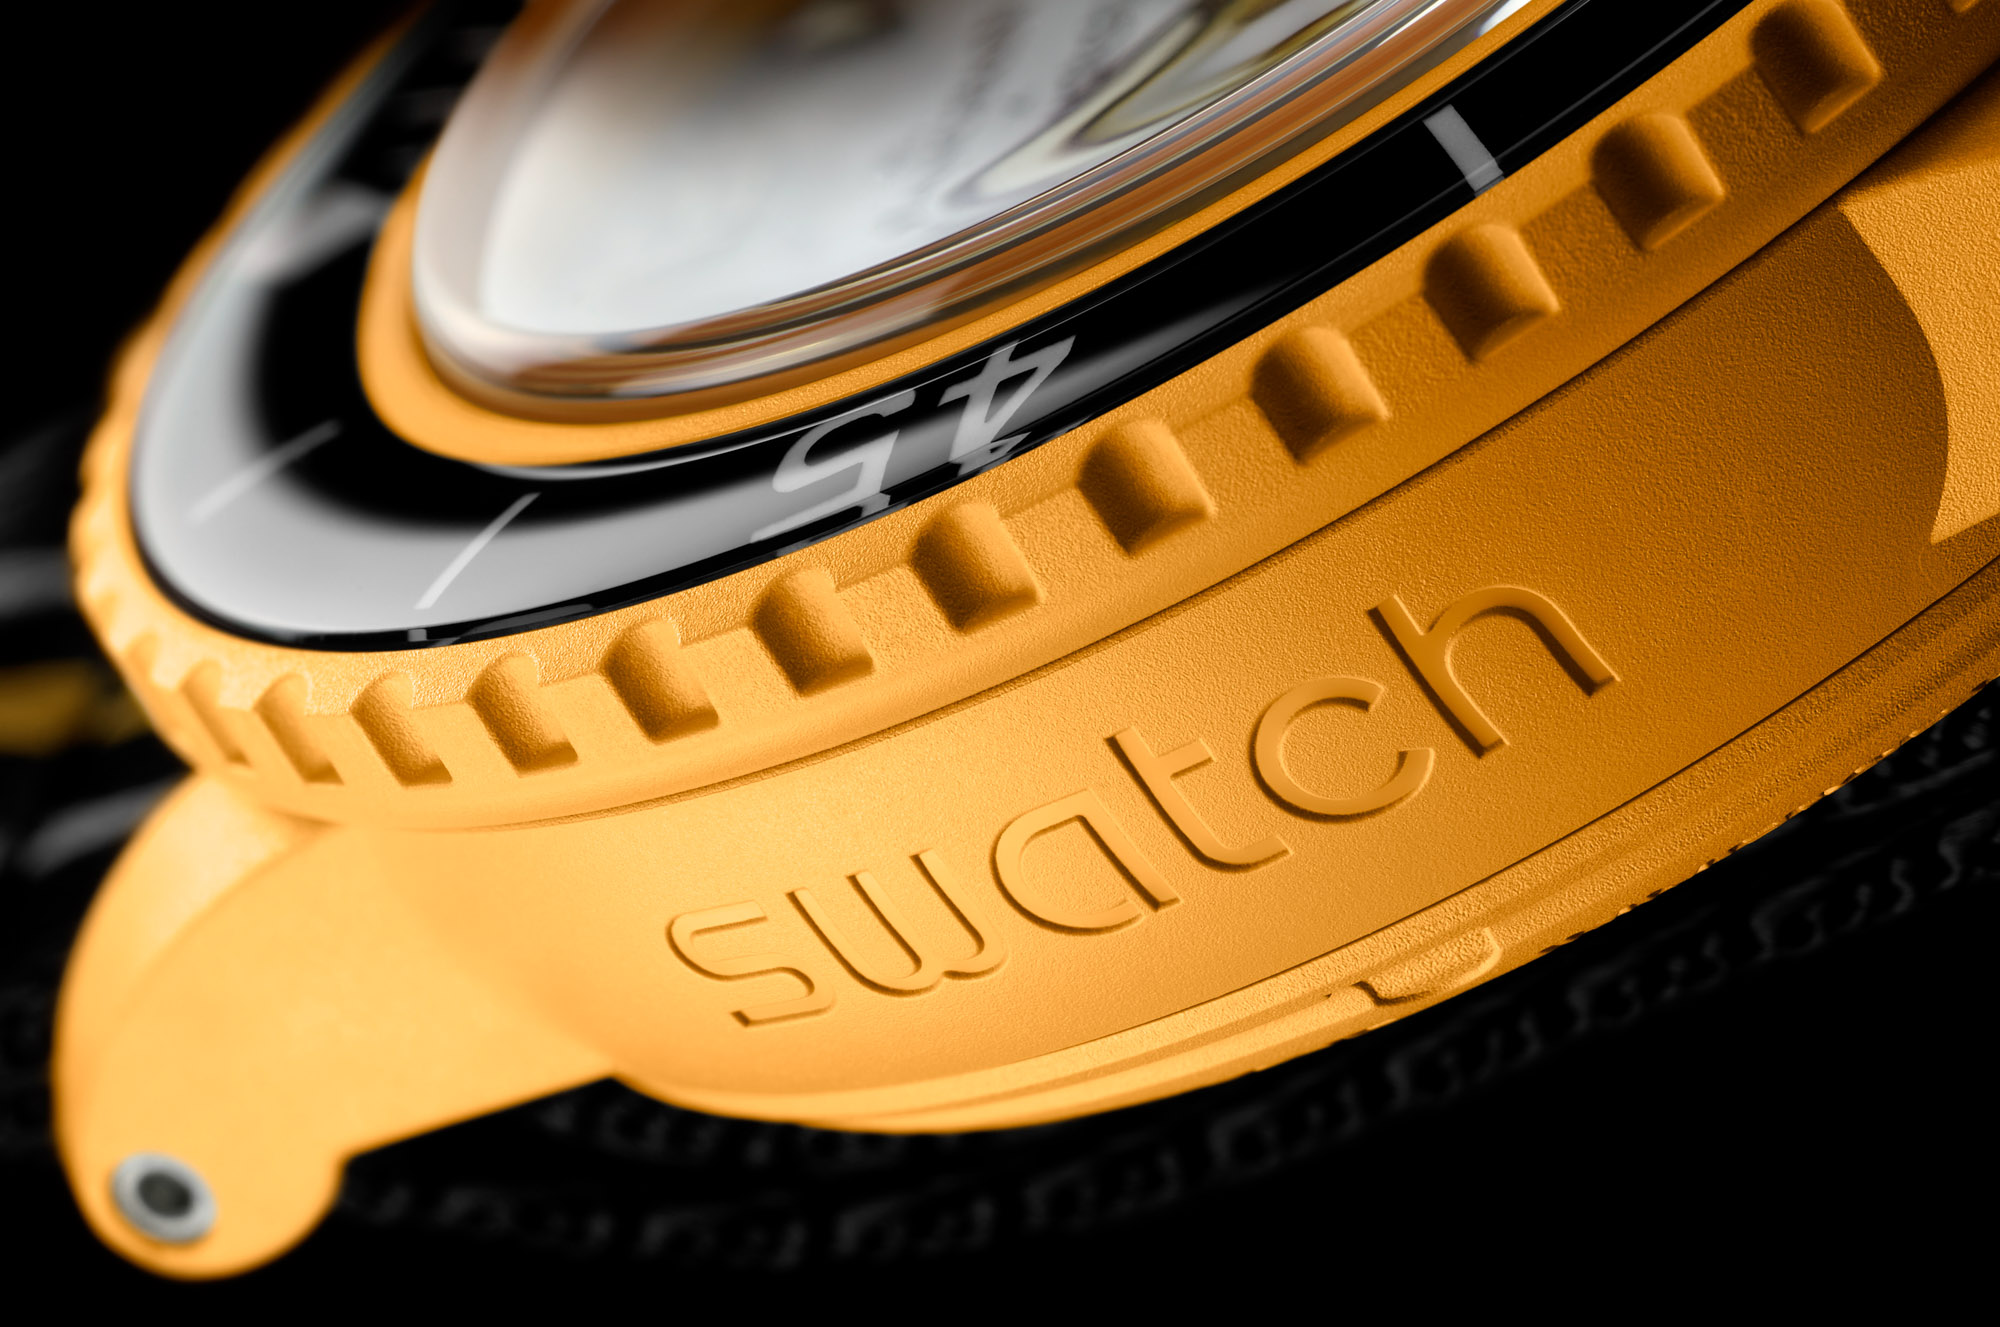 Часы Blancpain X Swatch Bioceramic Scuba Fifty Fathoms расширяют концепцию MoonSwatch